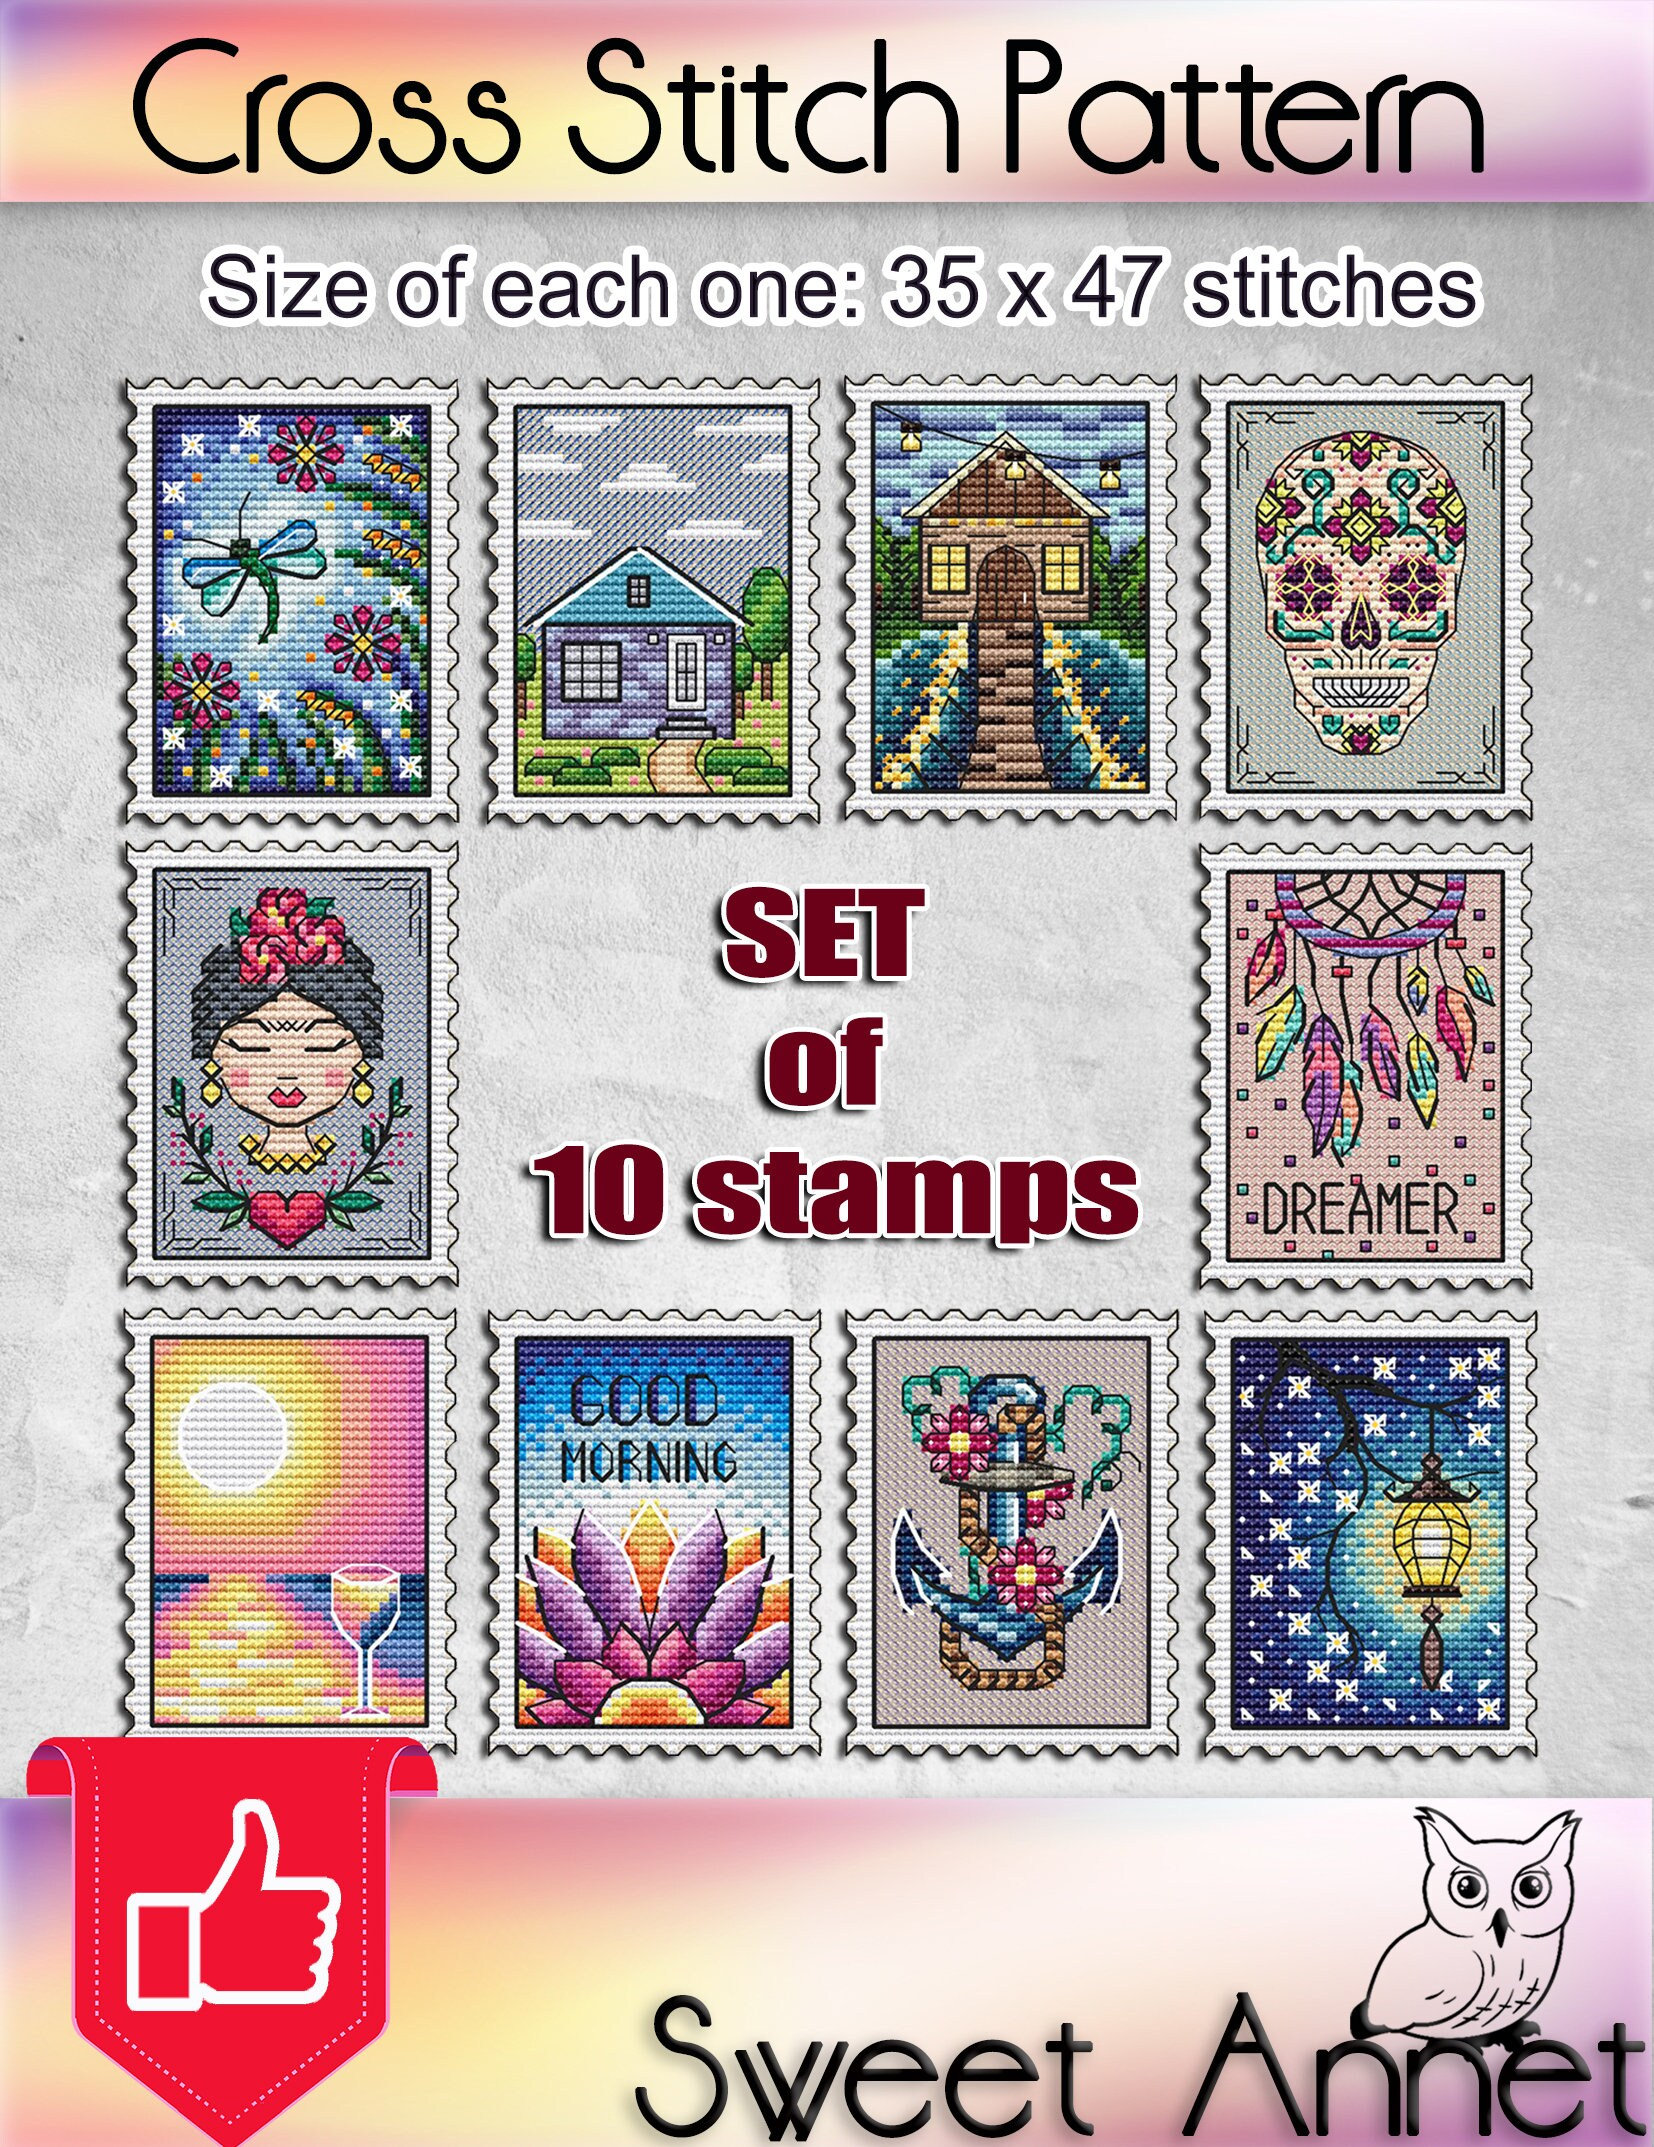 Free Printable Cross Stitch Patterns